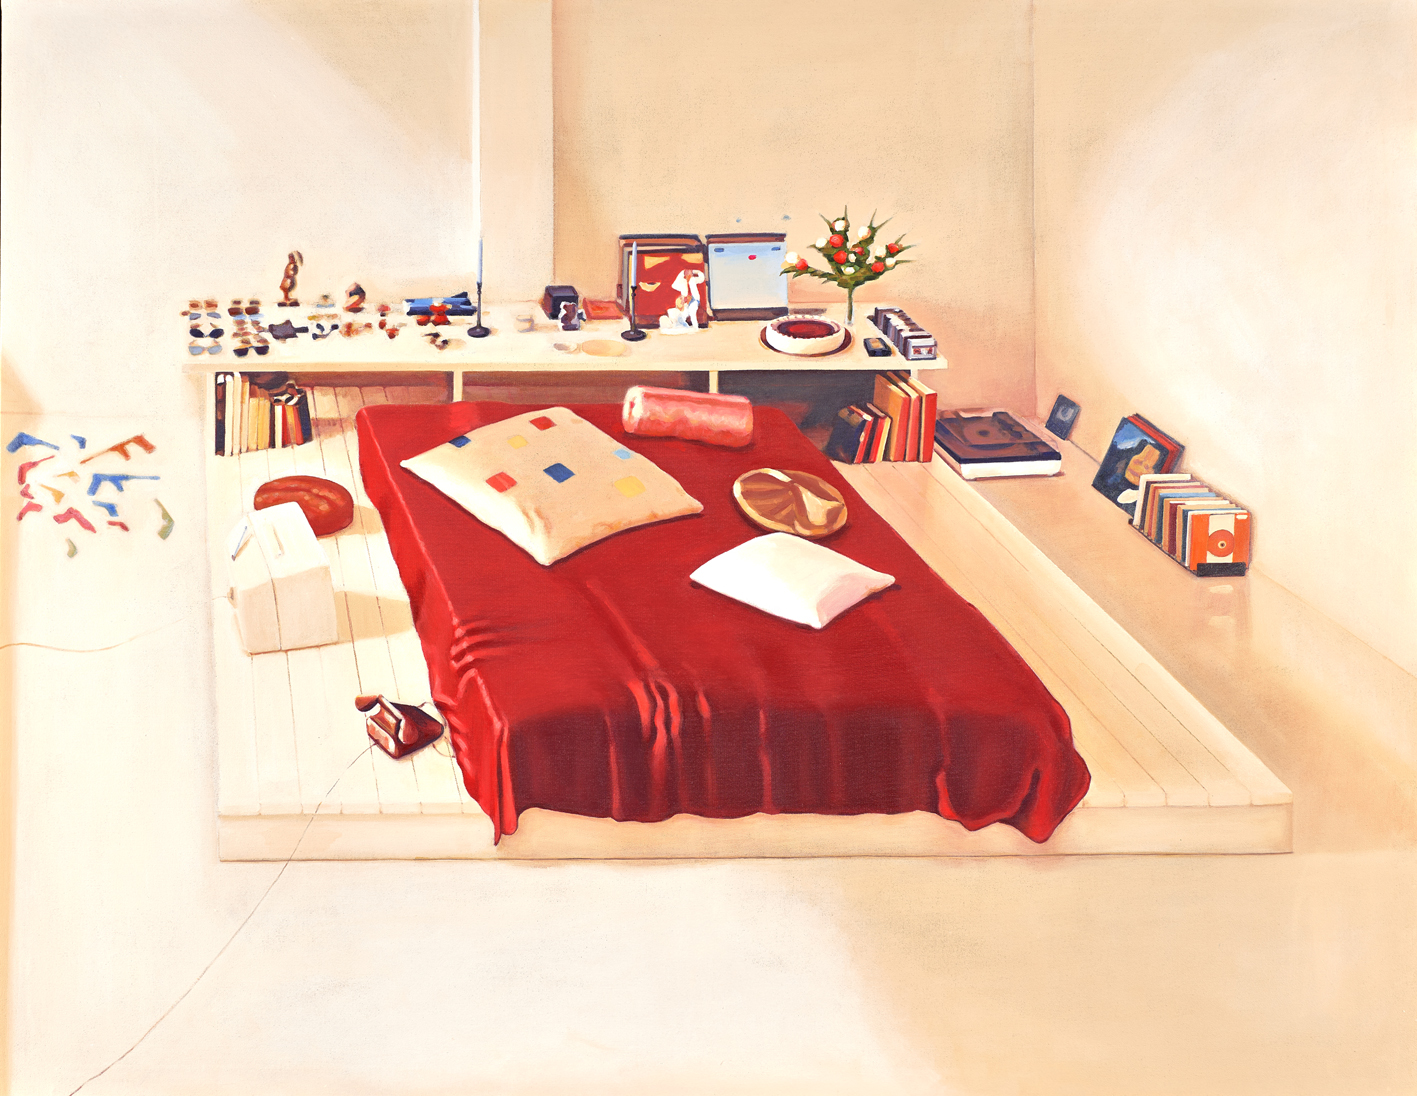 09.Martin Kippemberger, cama. 2021. Acrílico/tela. 114 x 146 cm.